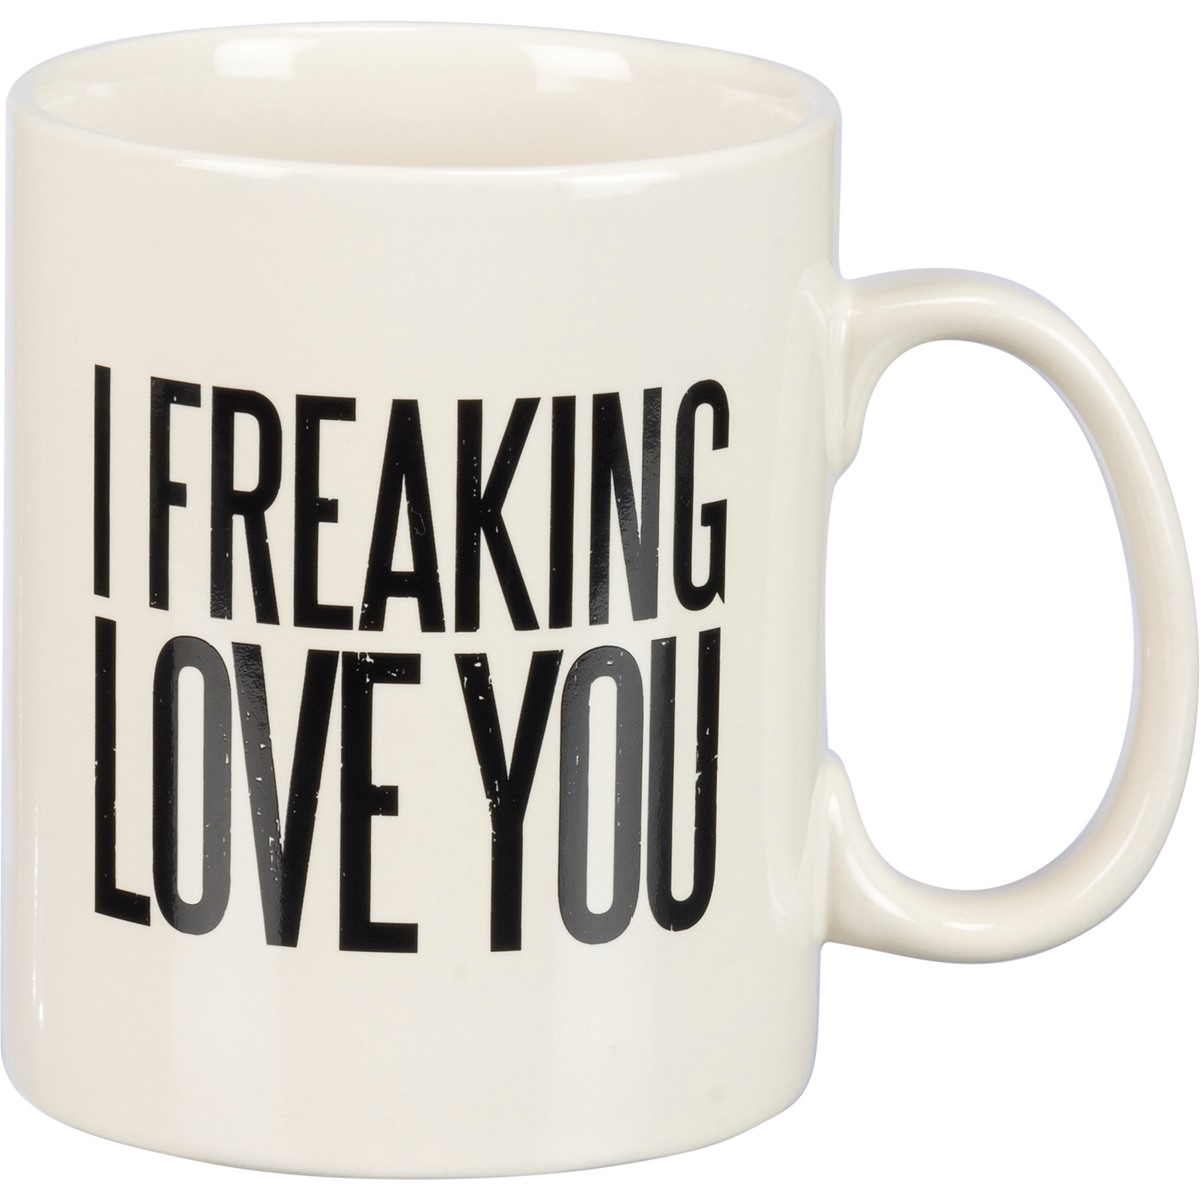 Mug - Freaking Love You - 20 oz., 5.25" x 3.50" x 4.50" - Stoneware